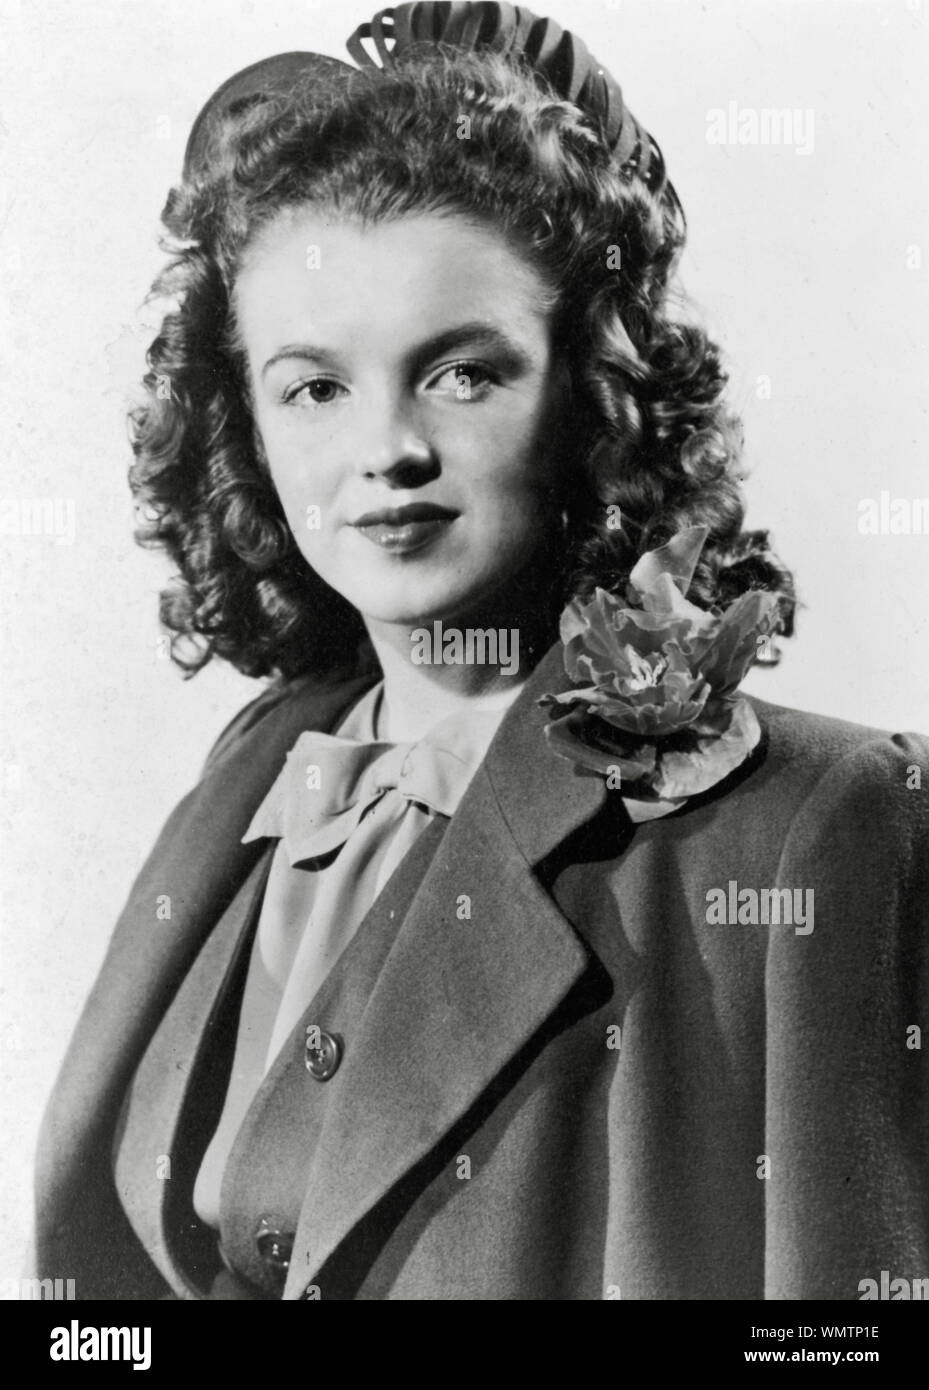 Norma Jeane Mortenson (alias Marilyn Monroe) als Jugendlicher, ca. 1941  Datei Referenz #33848-566 THA Stockfotografie - Alamy